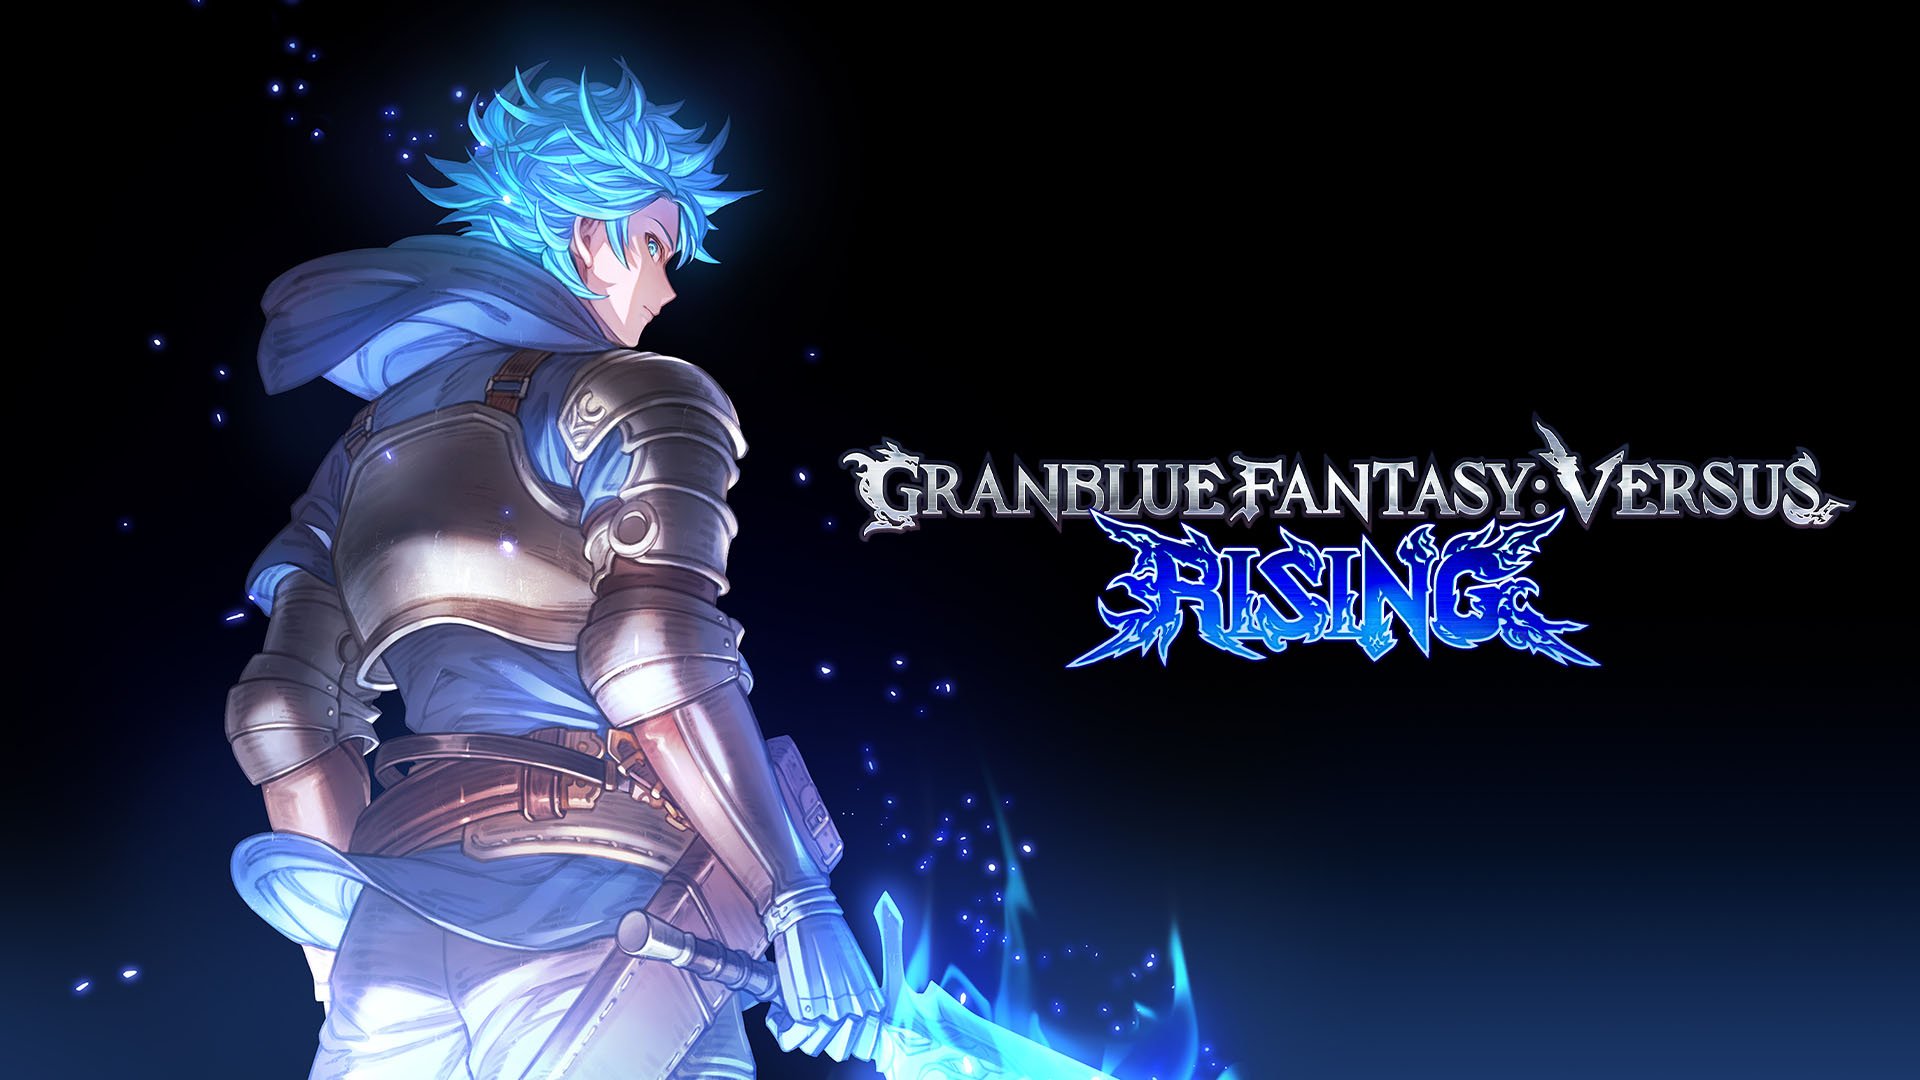 Granblue Fantasy: Versus Rising bylo oznámeno pro PS5, PS4 a PC